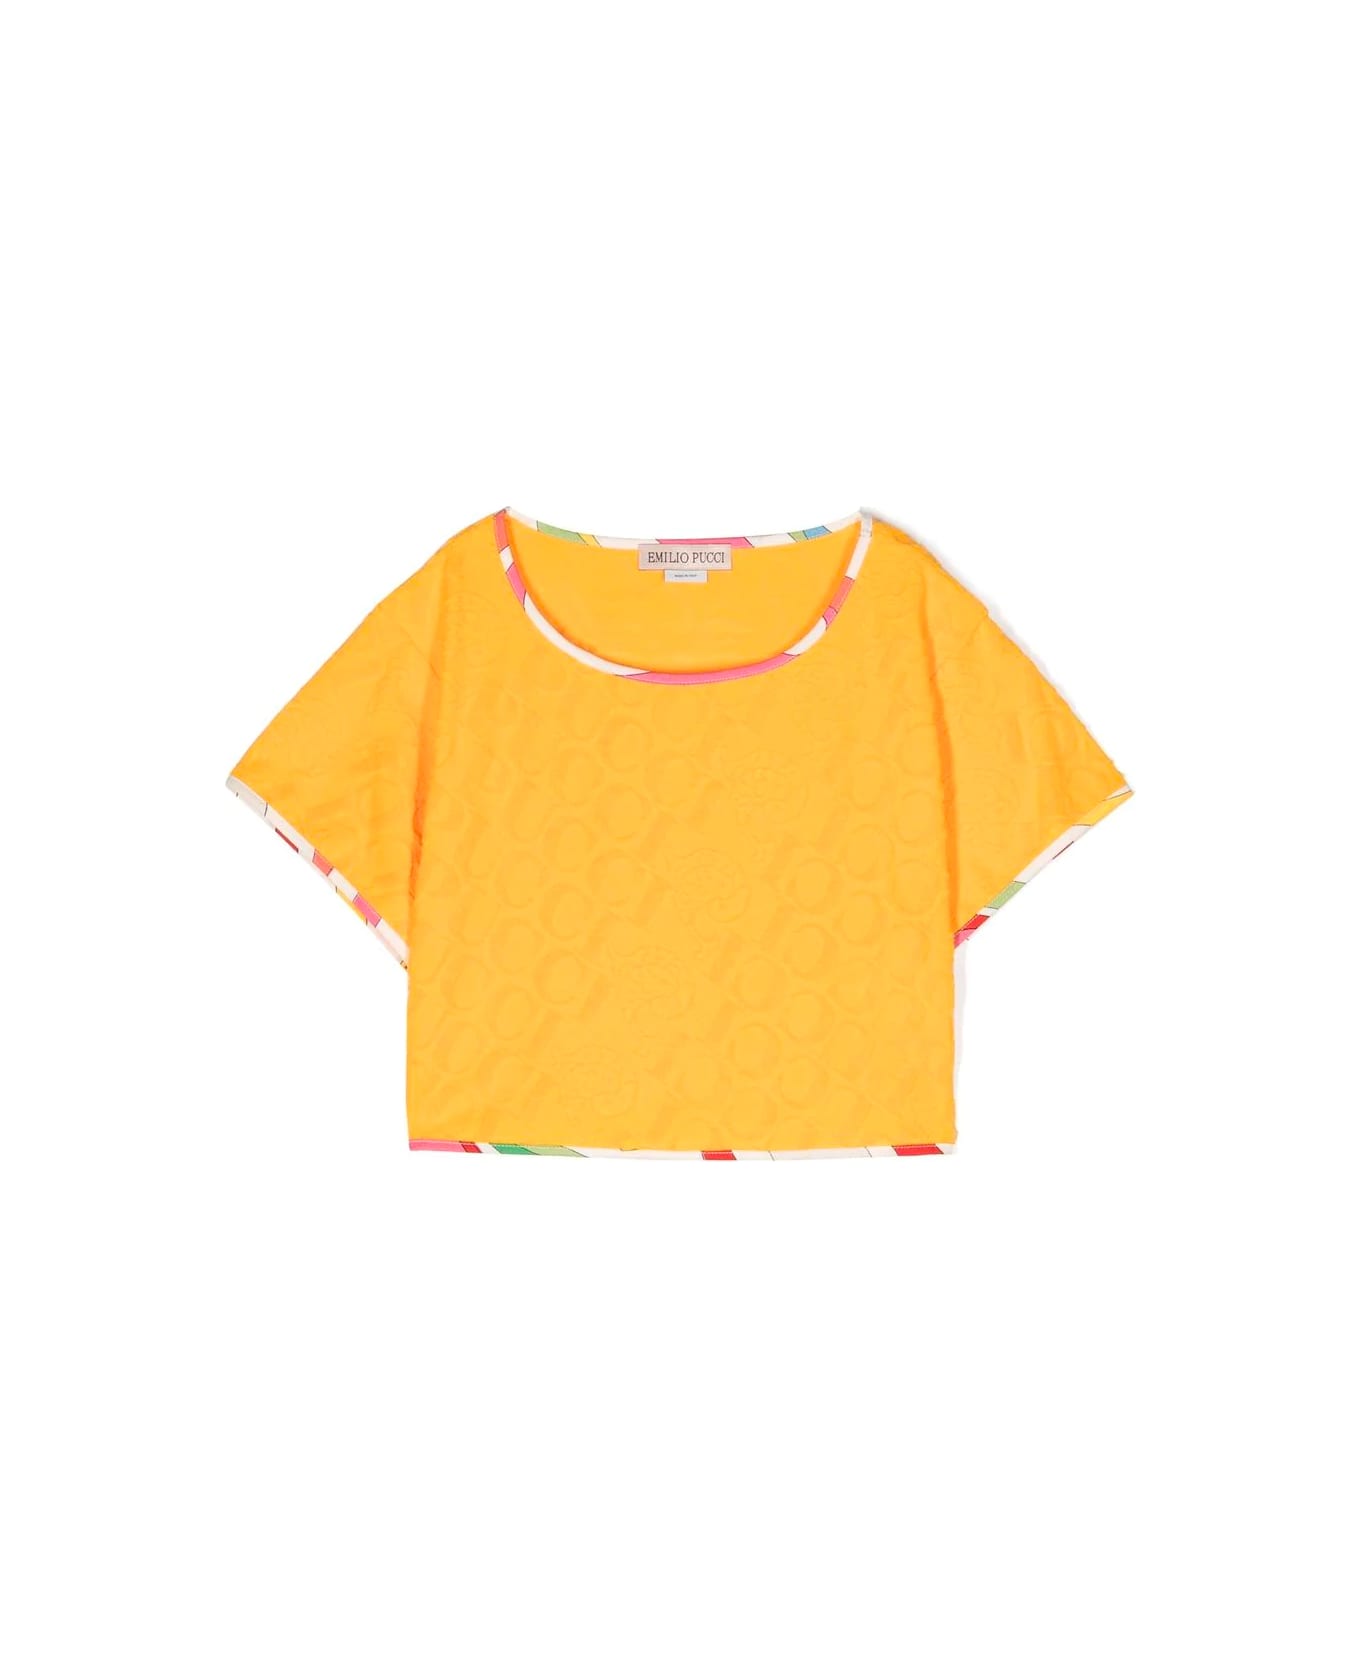 Pucci T-shirt - Mustard